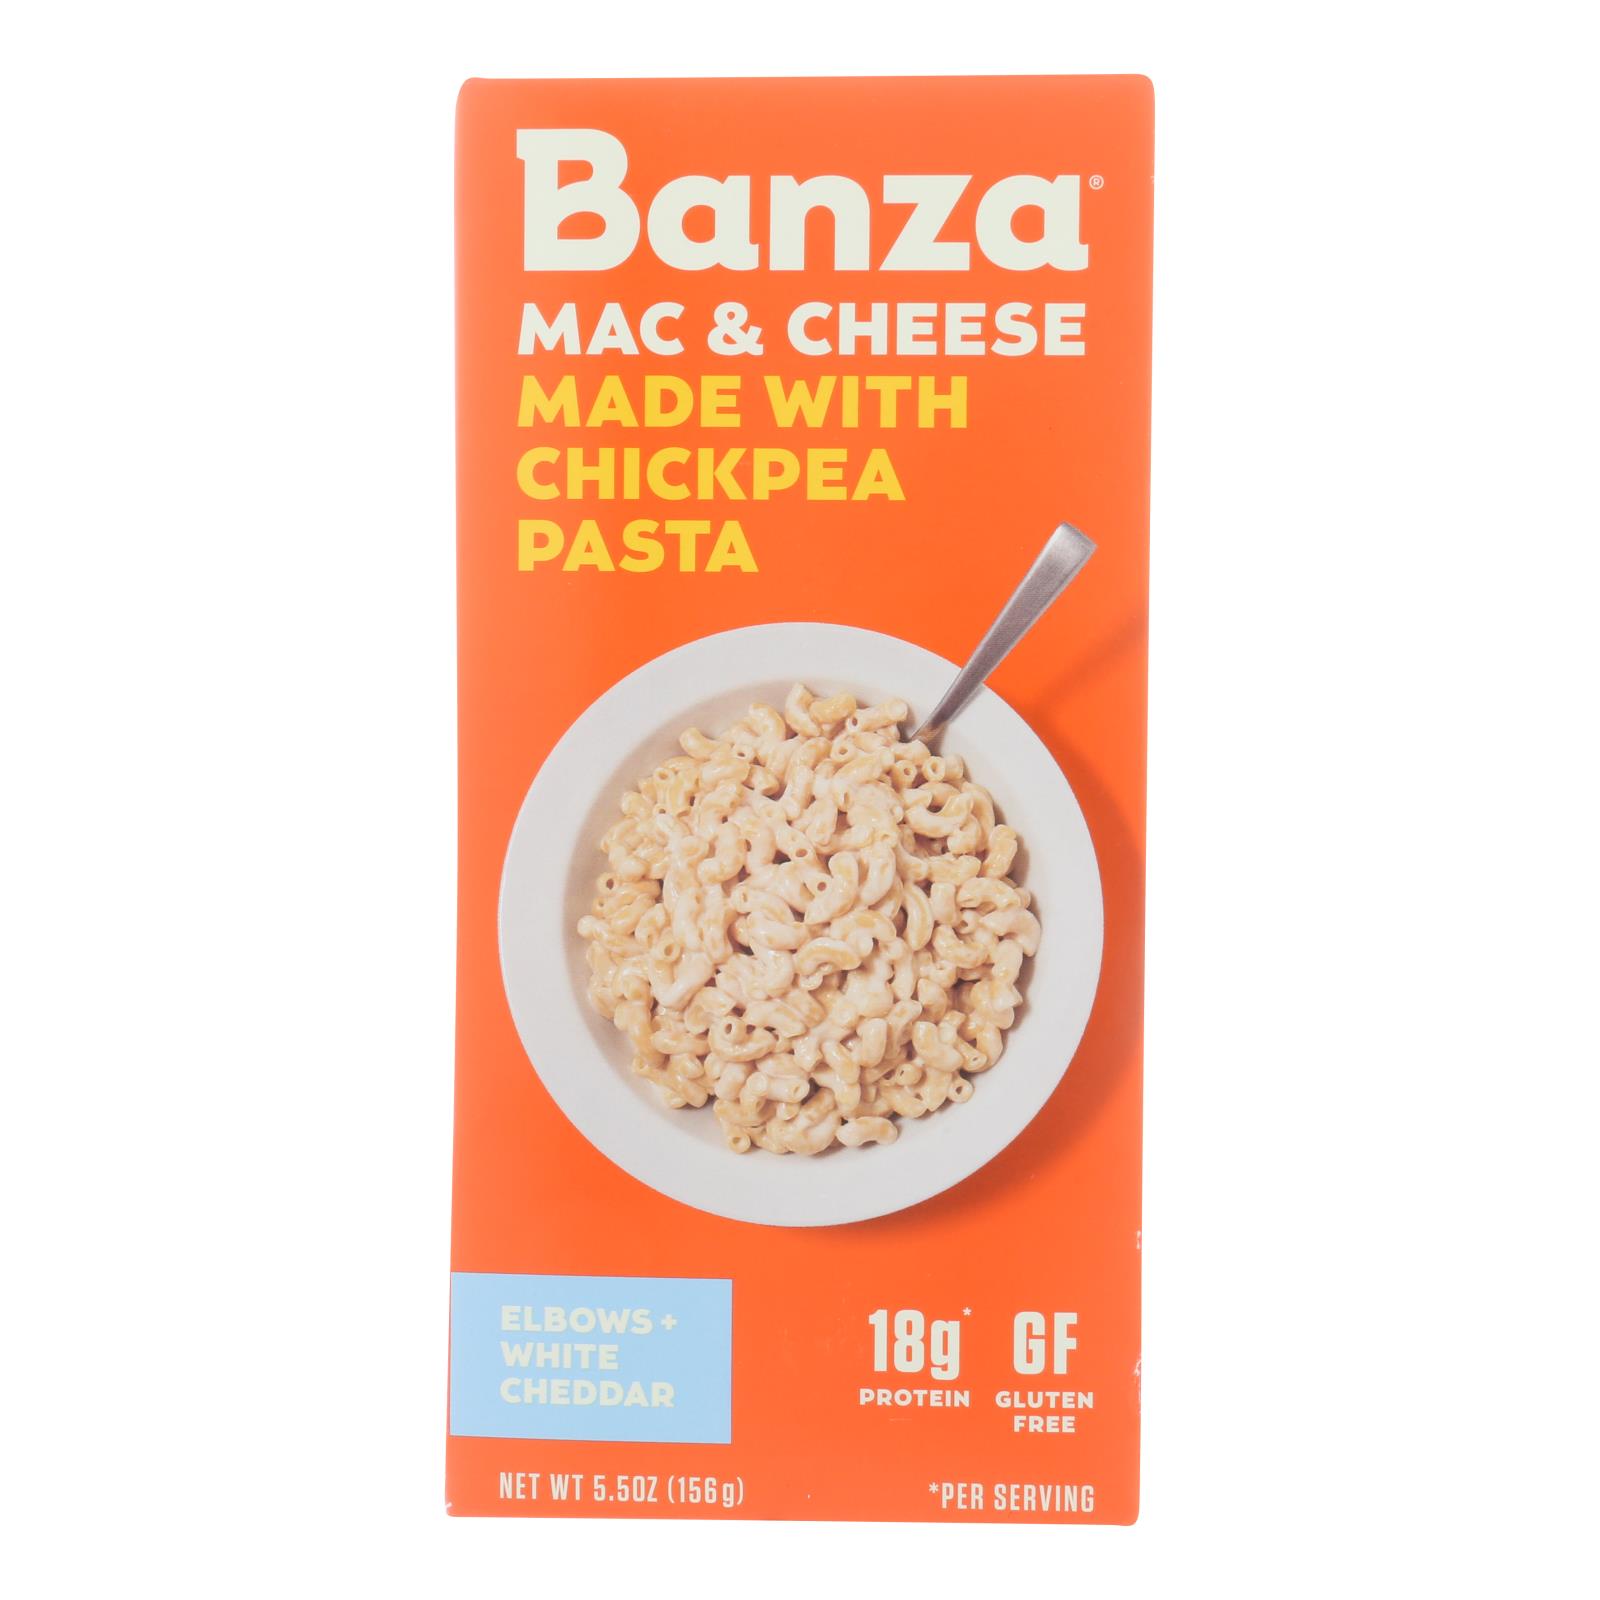 Banza - Chickpea Pasta Mac and Cheese - White Cheddar - 6개 묶음상품 - 5.5 oz.